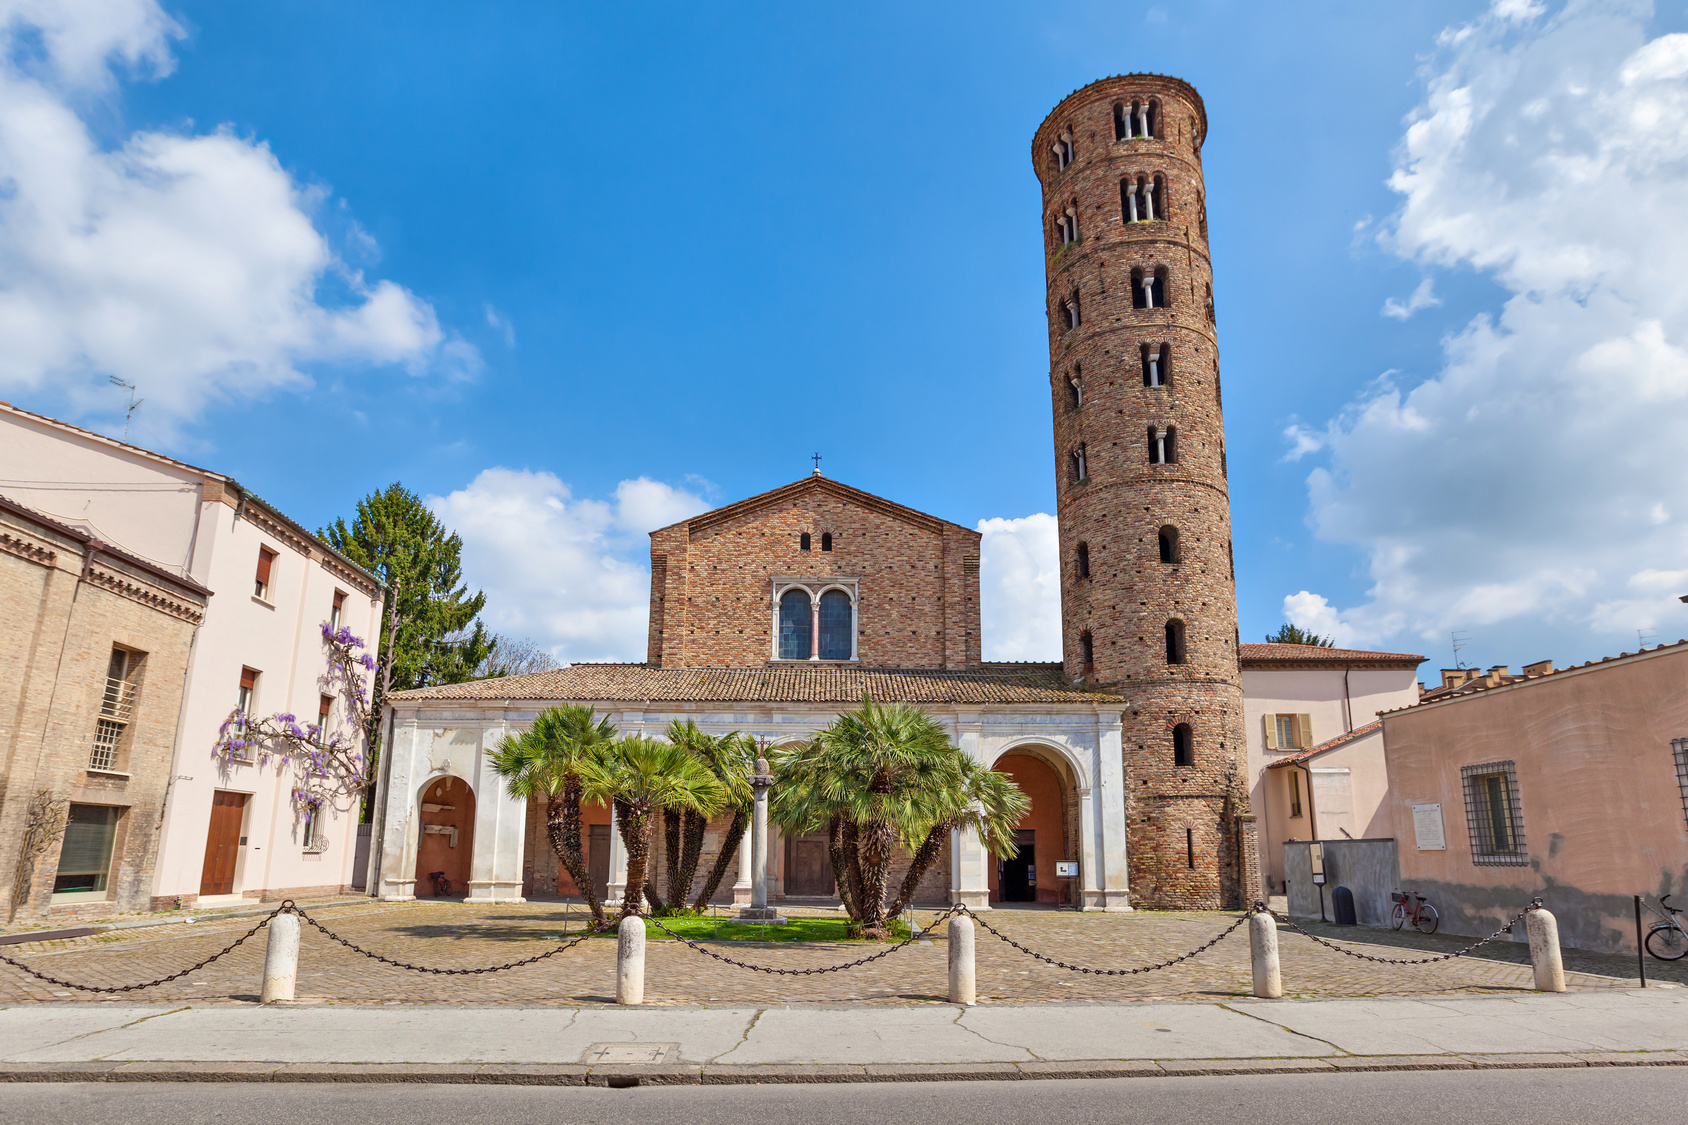 Ravenna Shore Excursions. Italy Travel Guides, Emilia-Romagna
